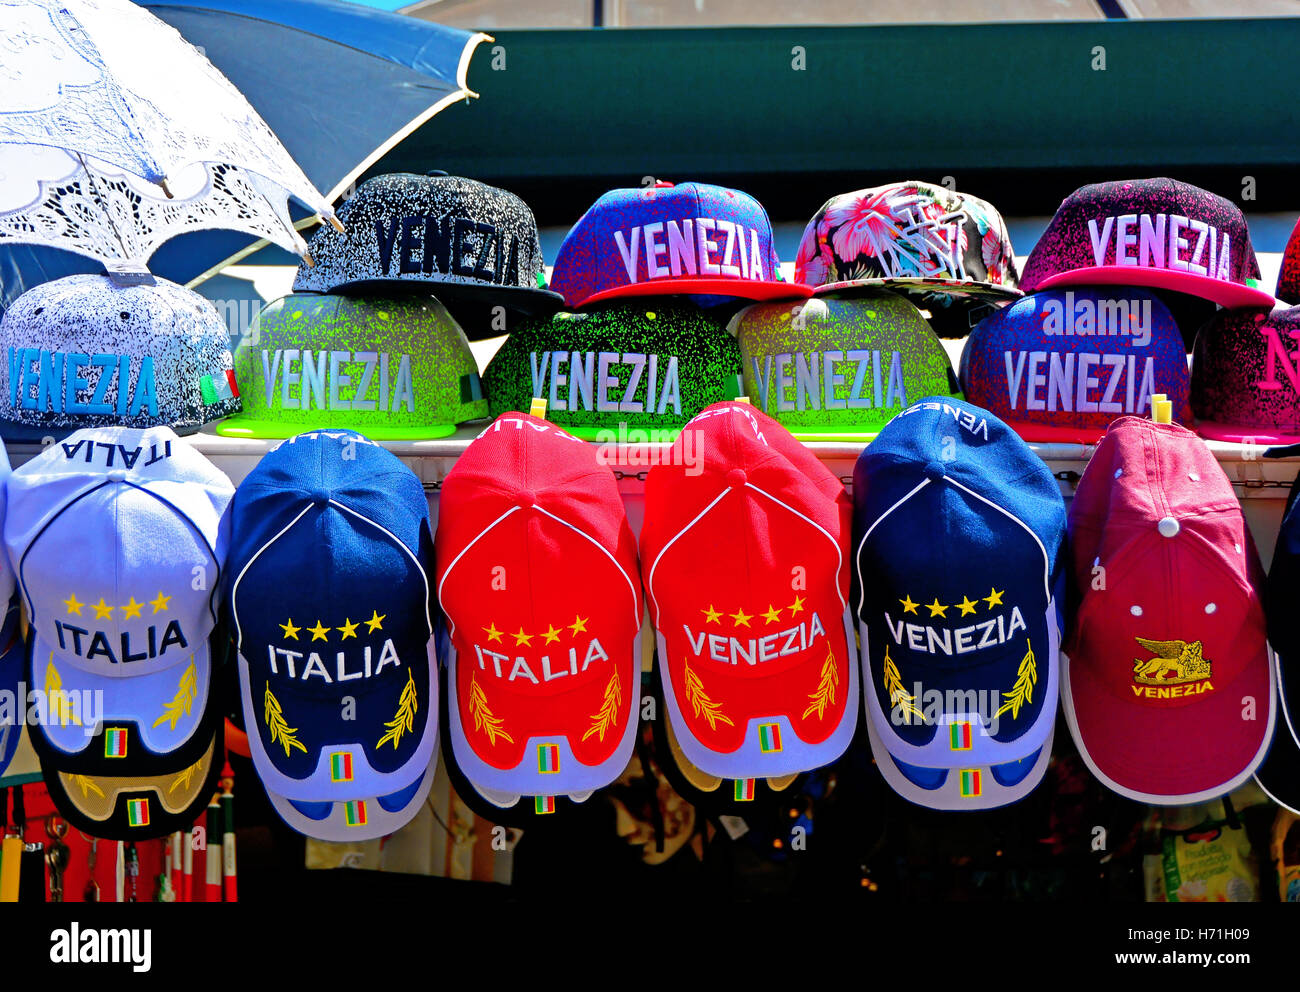 Venice Venezia Italia tourist baseball caps Stock Photo - Alamy